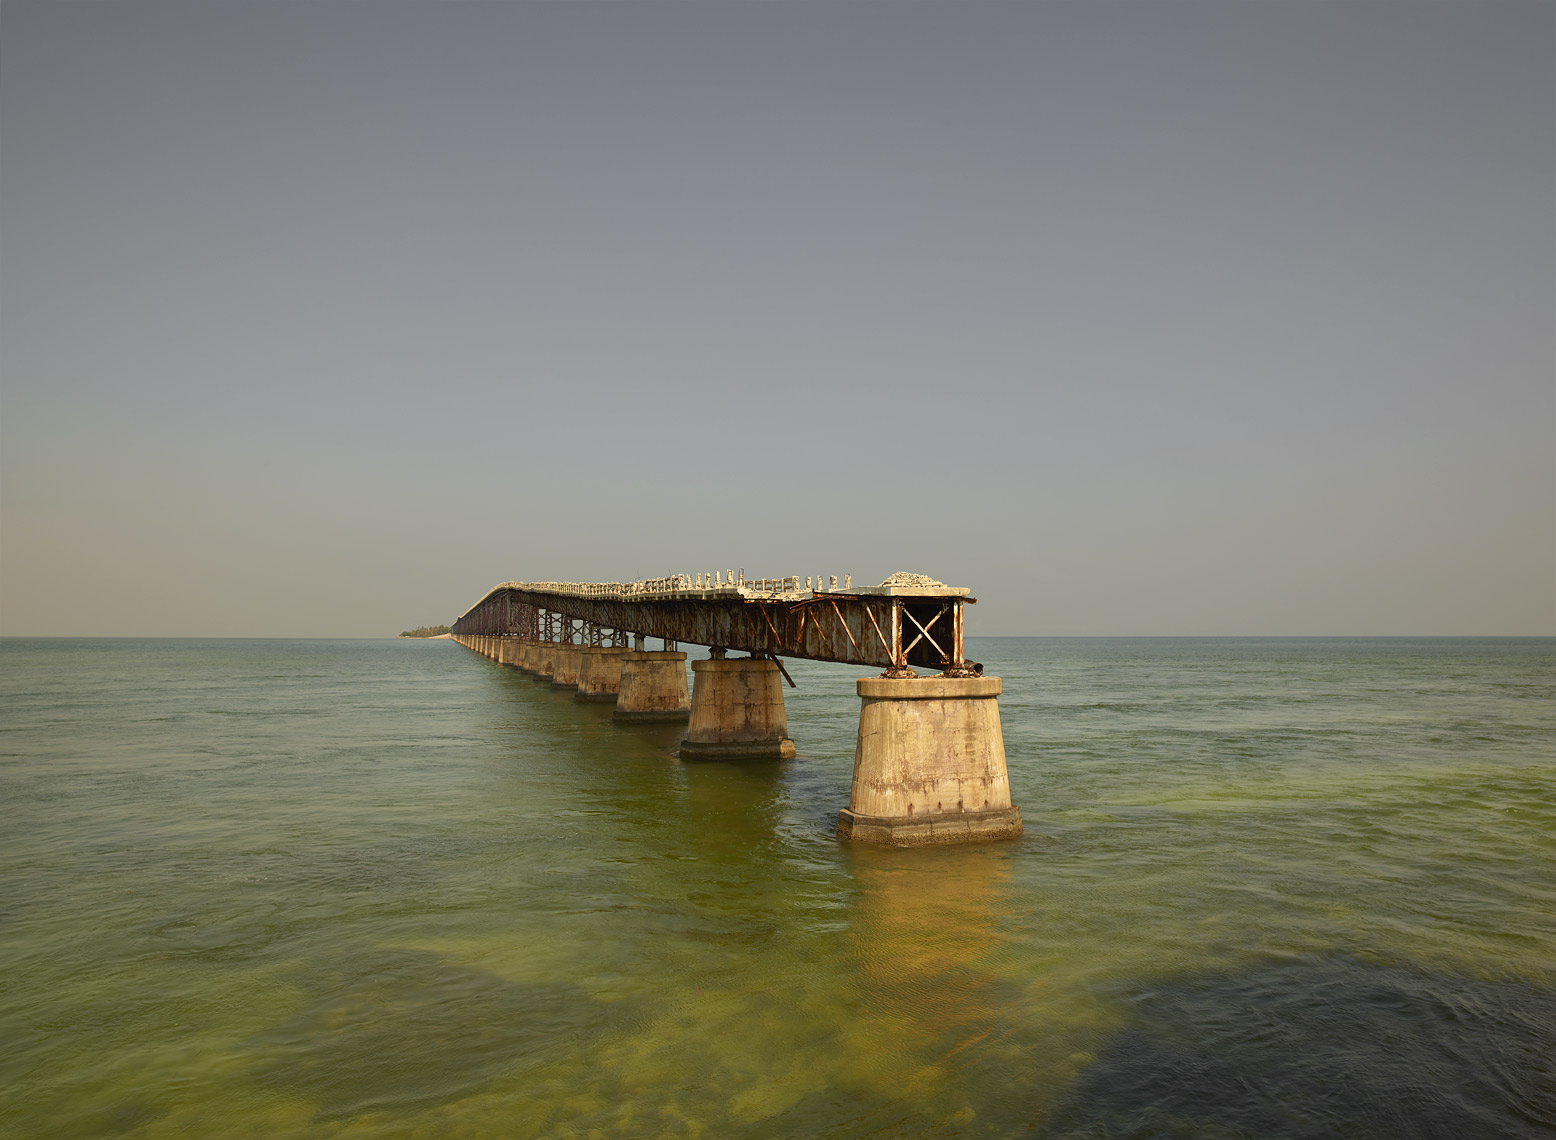 Abandoned railroad bridge over the Atlantic Ocean